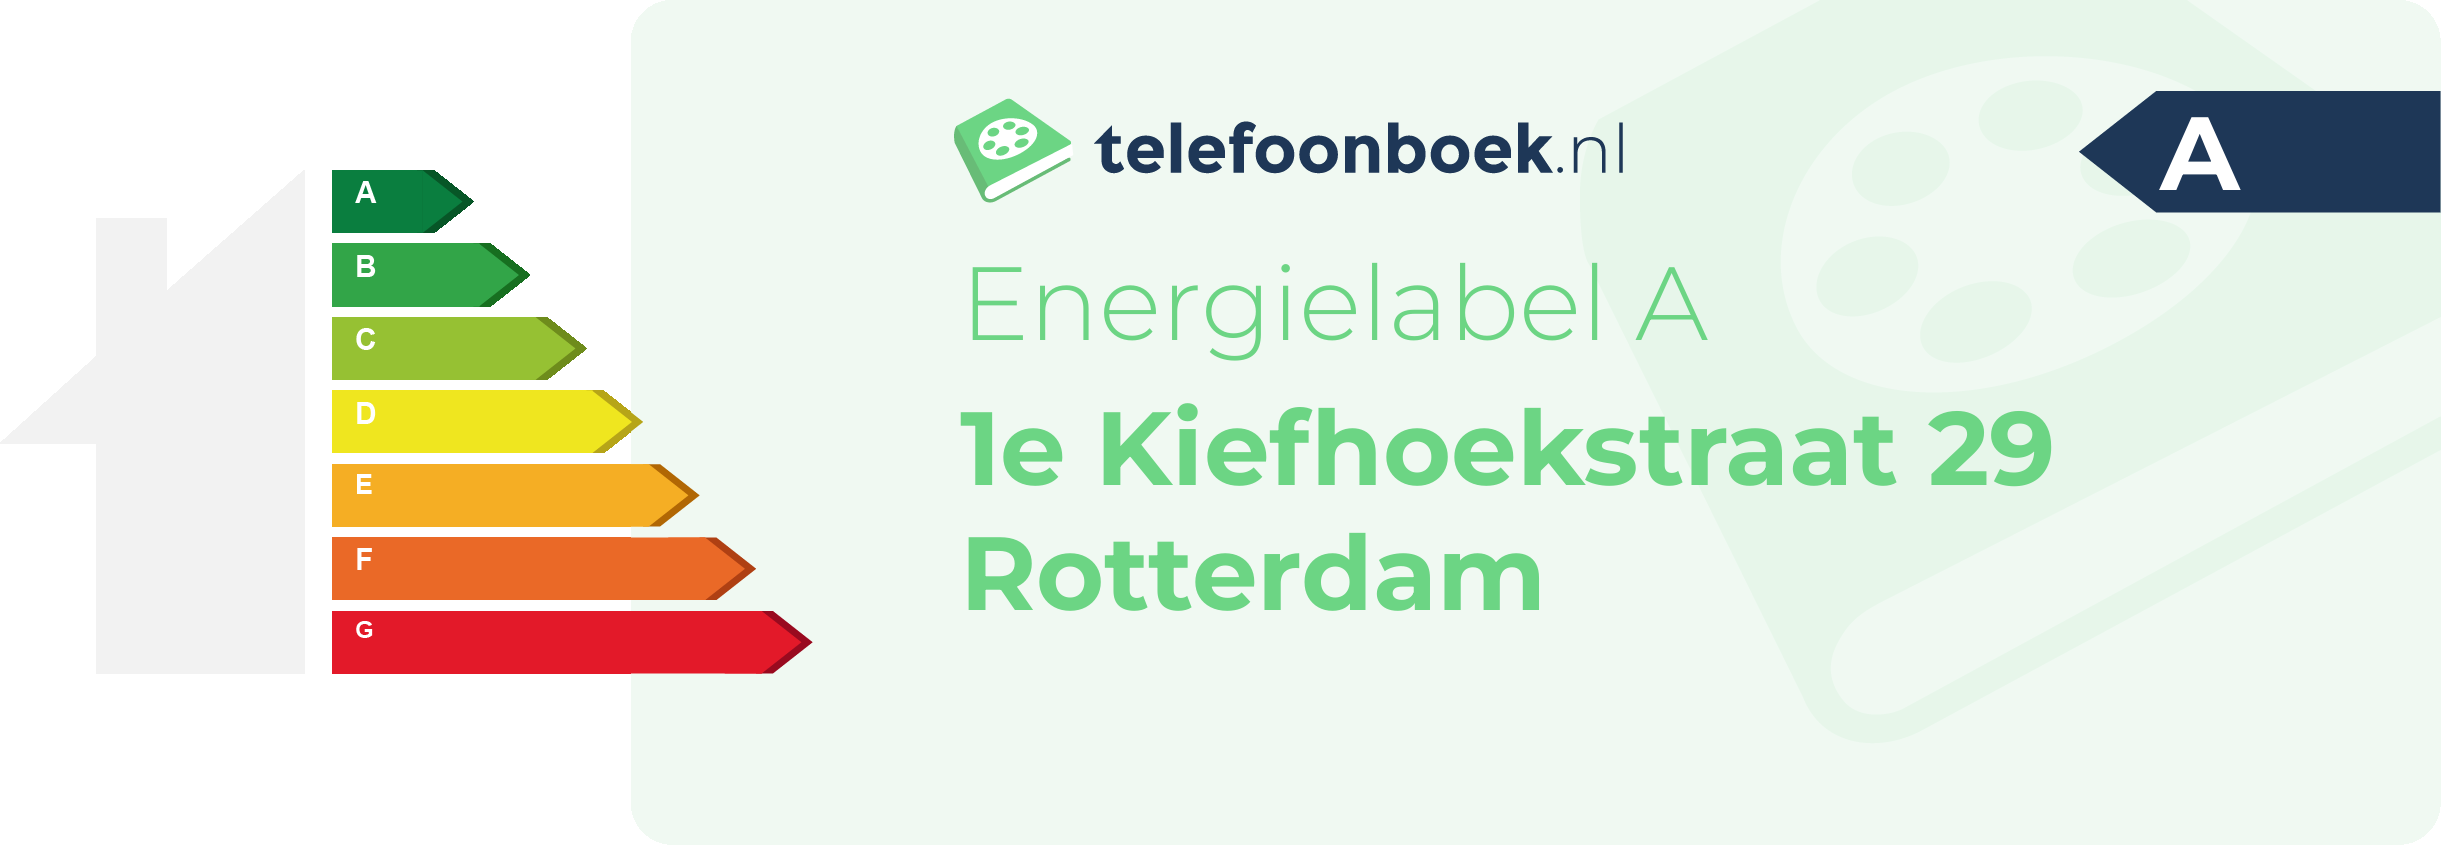 Energielabel 1e Kiefhoekstraat 29 Rotterdam